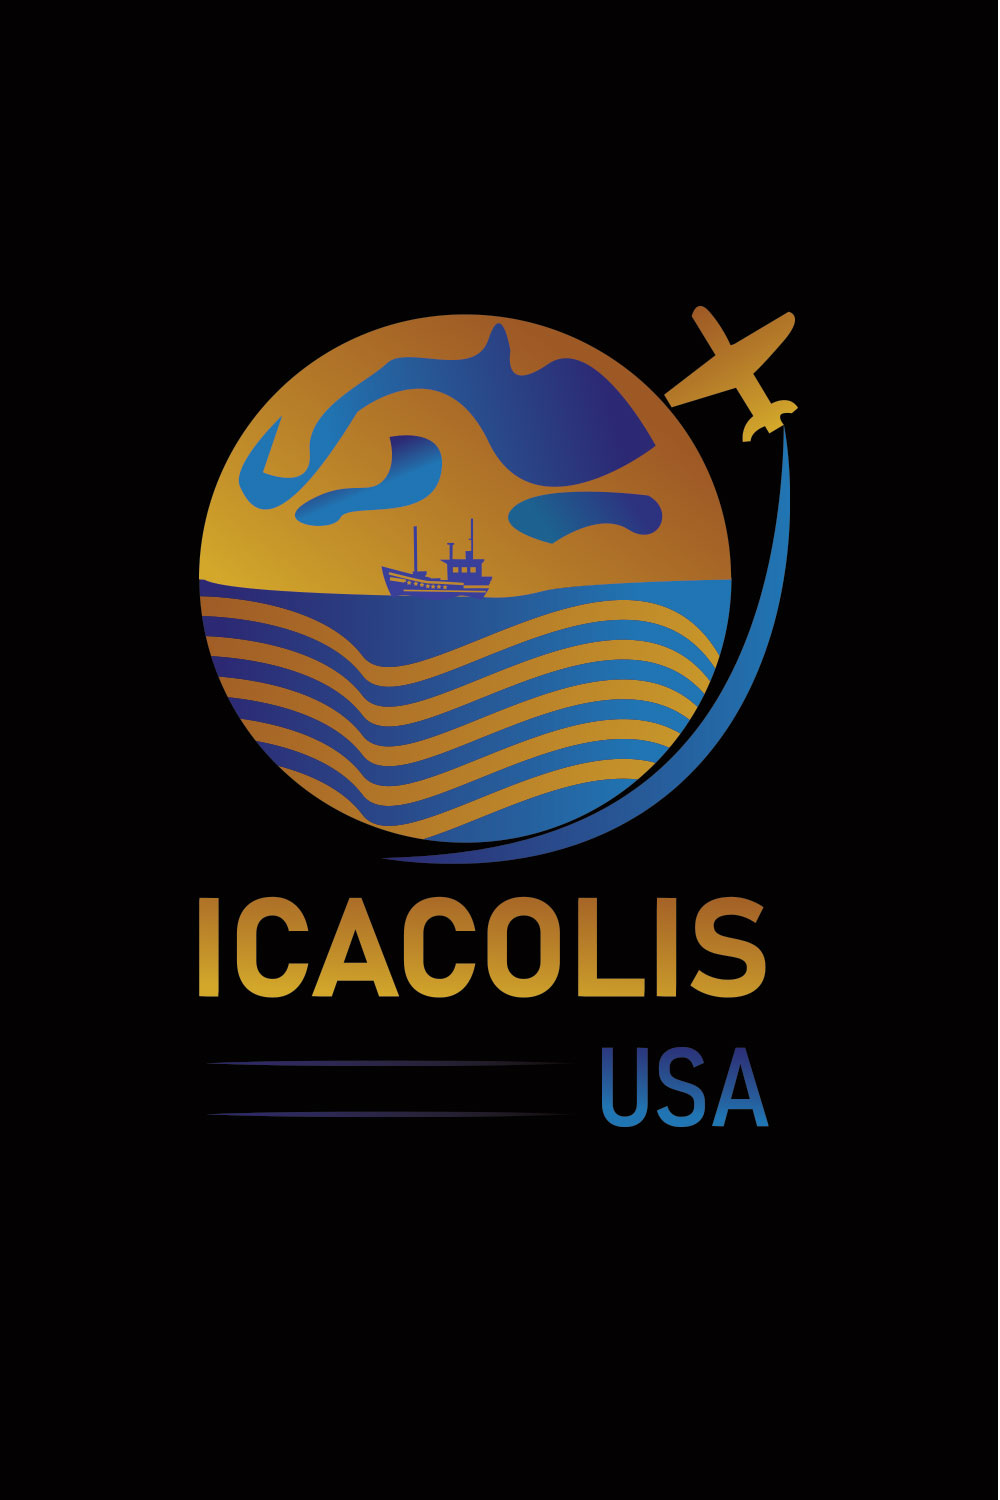 ICACOLIS USA logo pinterest preview image.